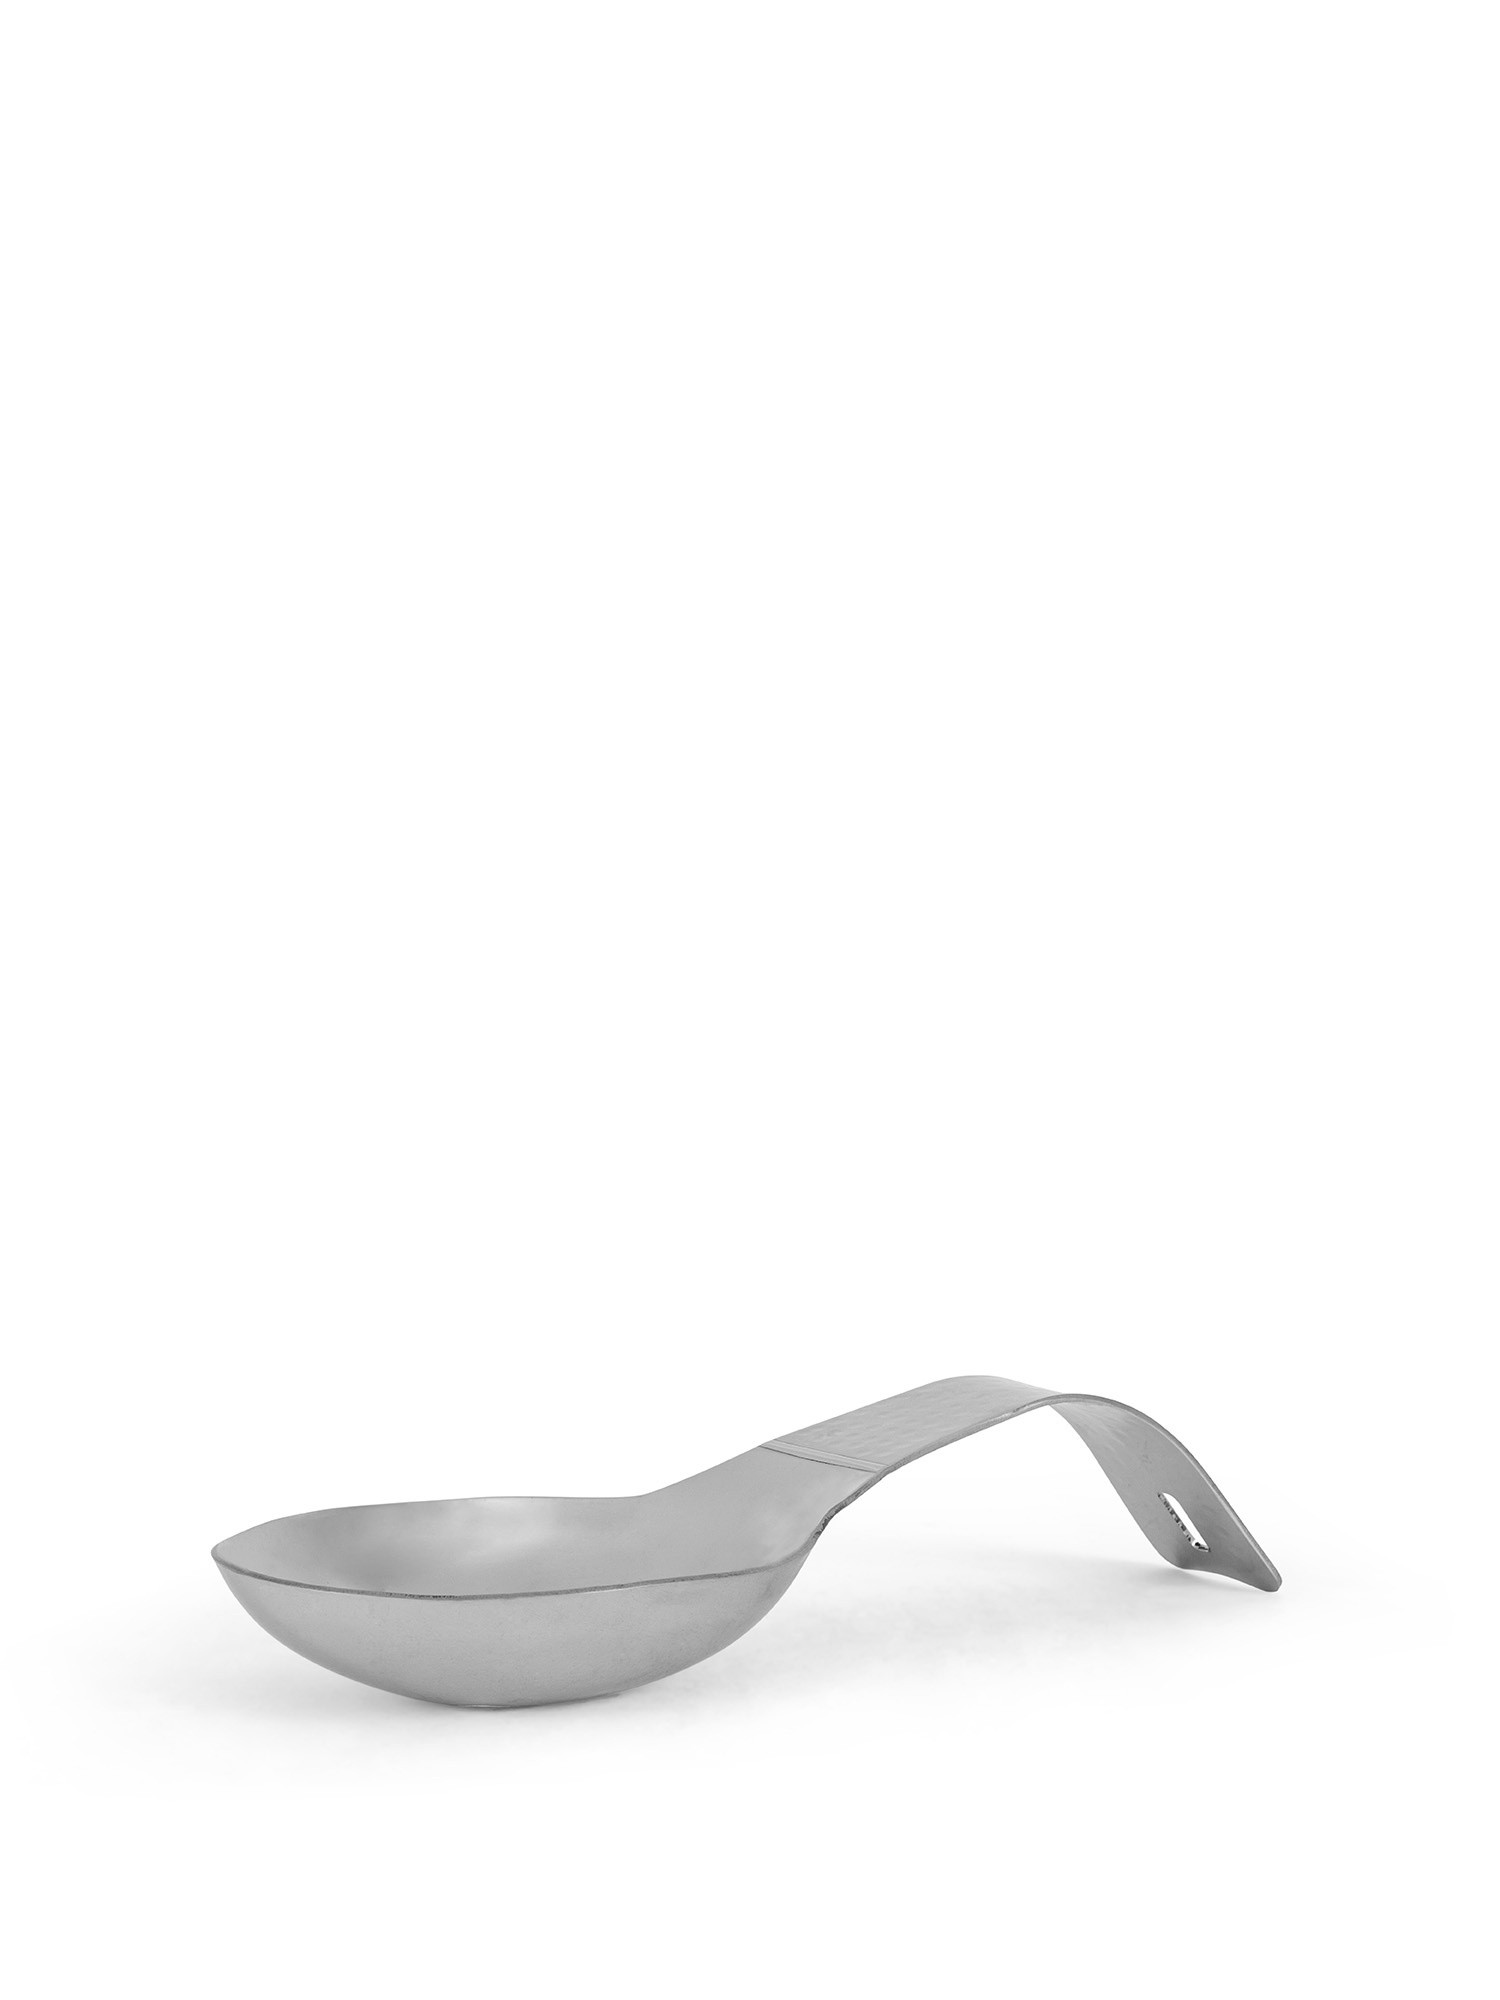 Ladle holder in steel, Silver Grey, large image number 0